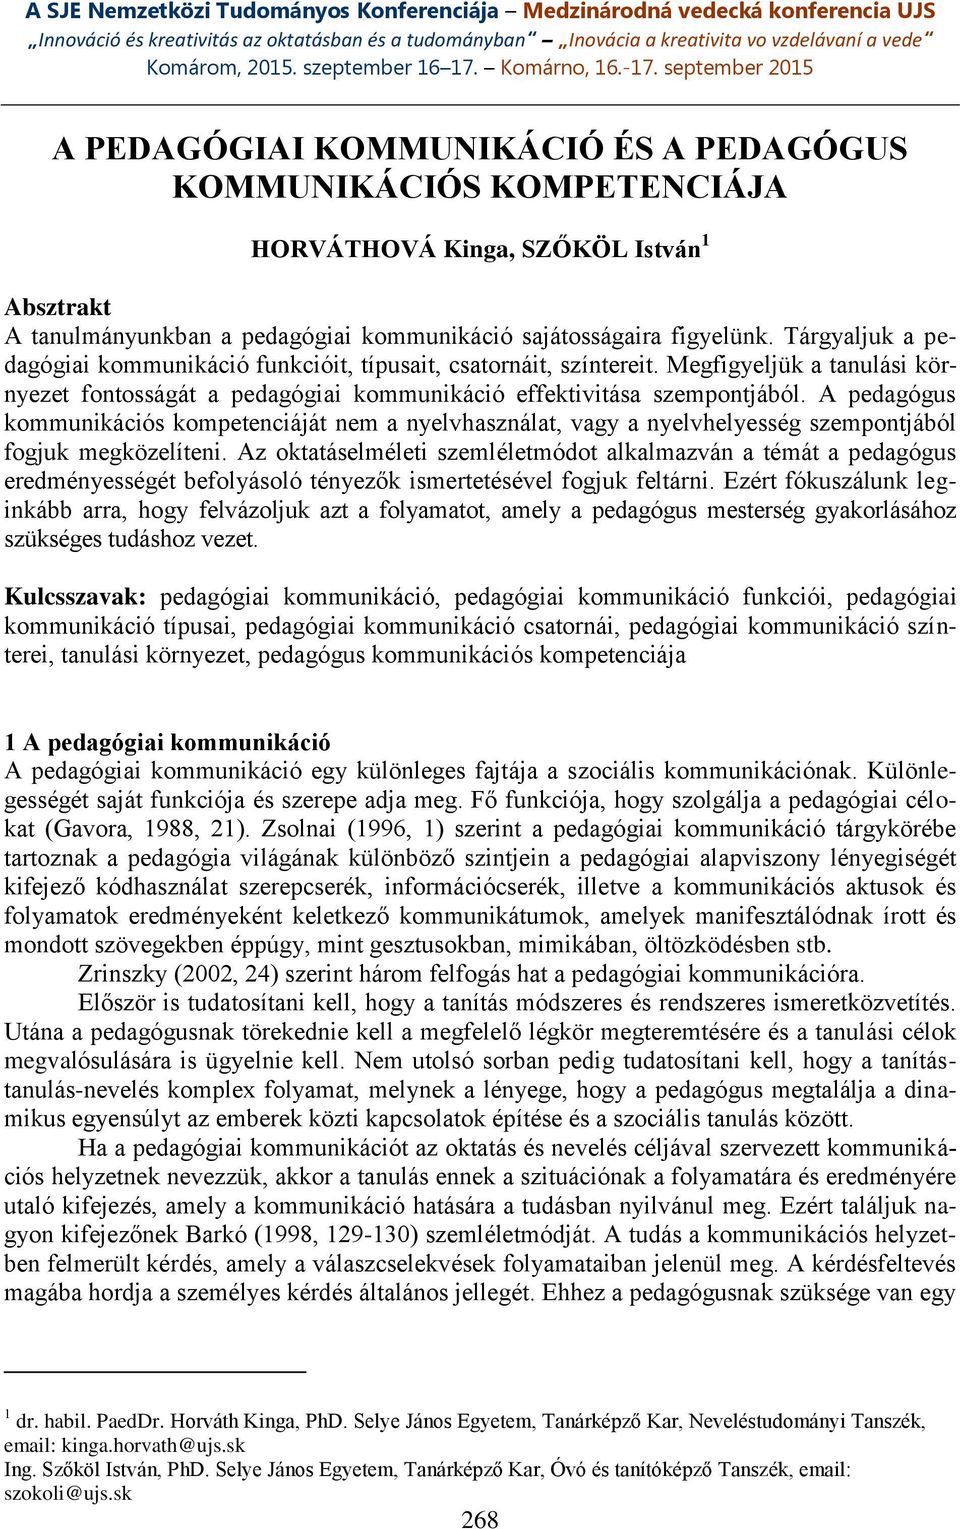 A PEDAGÓGIAI KOMMUNIKÁCIÓ ÉS A PEDAGÓGUS KOMMUNIKÁCIÓS KOMPETENCIÁJA - PDF  Free Download